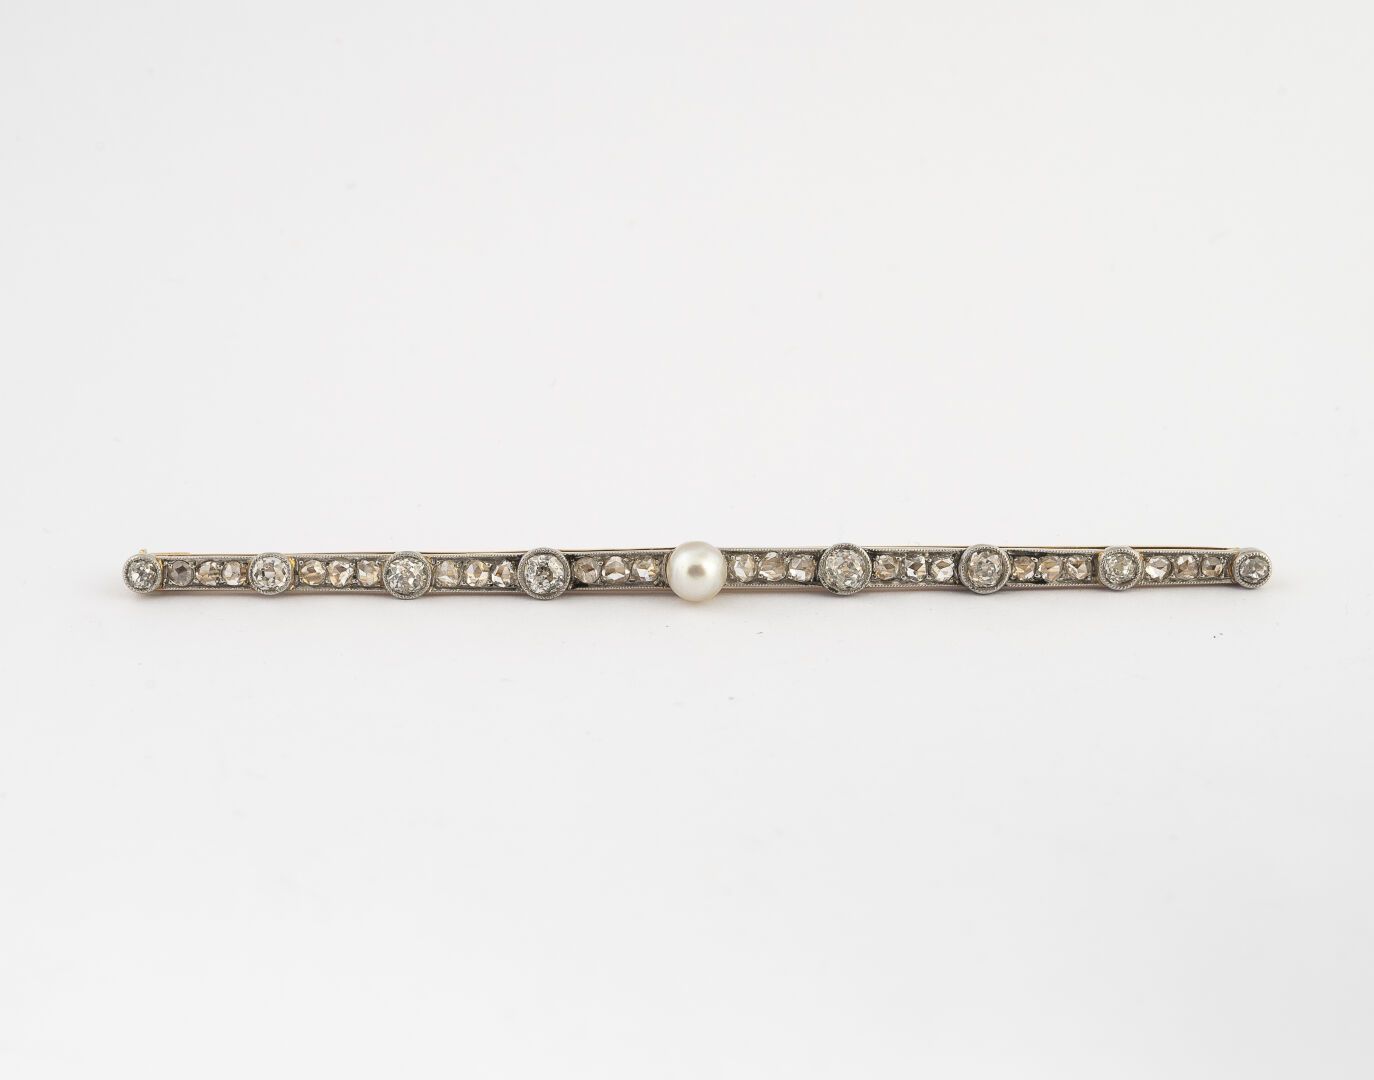 Null 重要的胸针

750°/°的白金和铂金材质

在纽扣珍珠的中心，有一滴TA钻石与玫瑰花交替出现

约1900年

毛重：9.8克

长度: 10 cm&hellip;